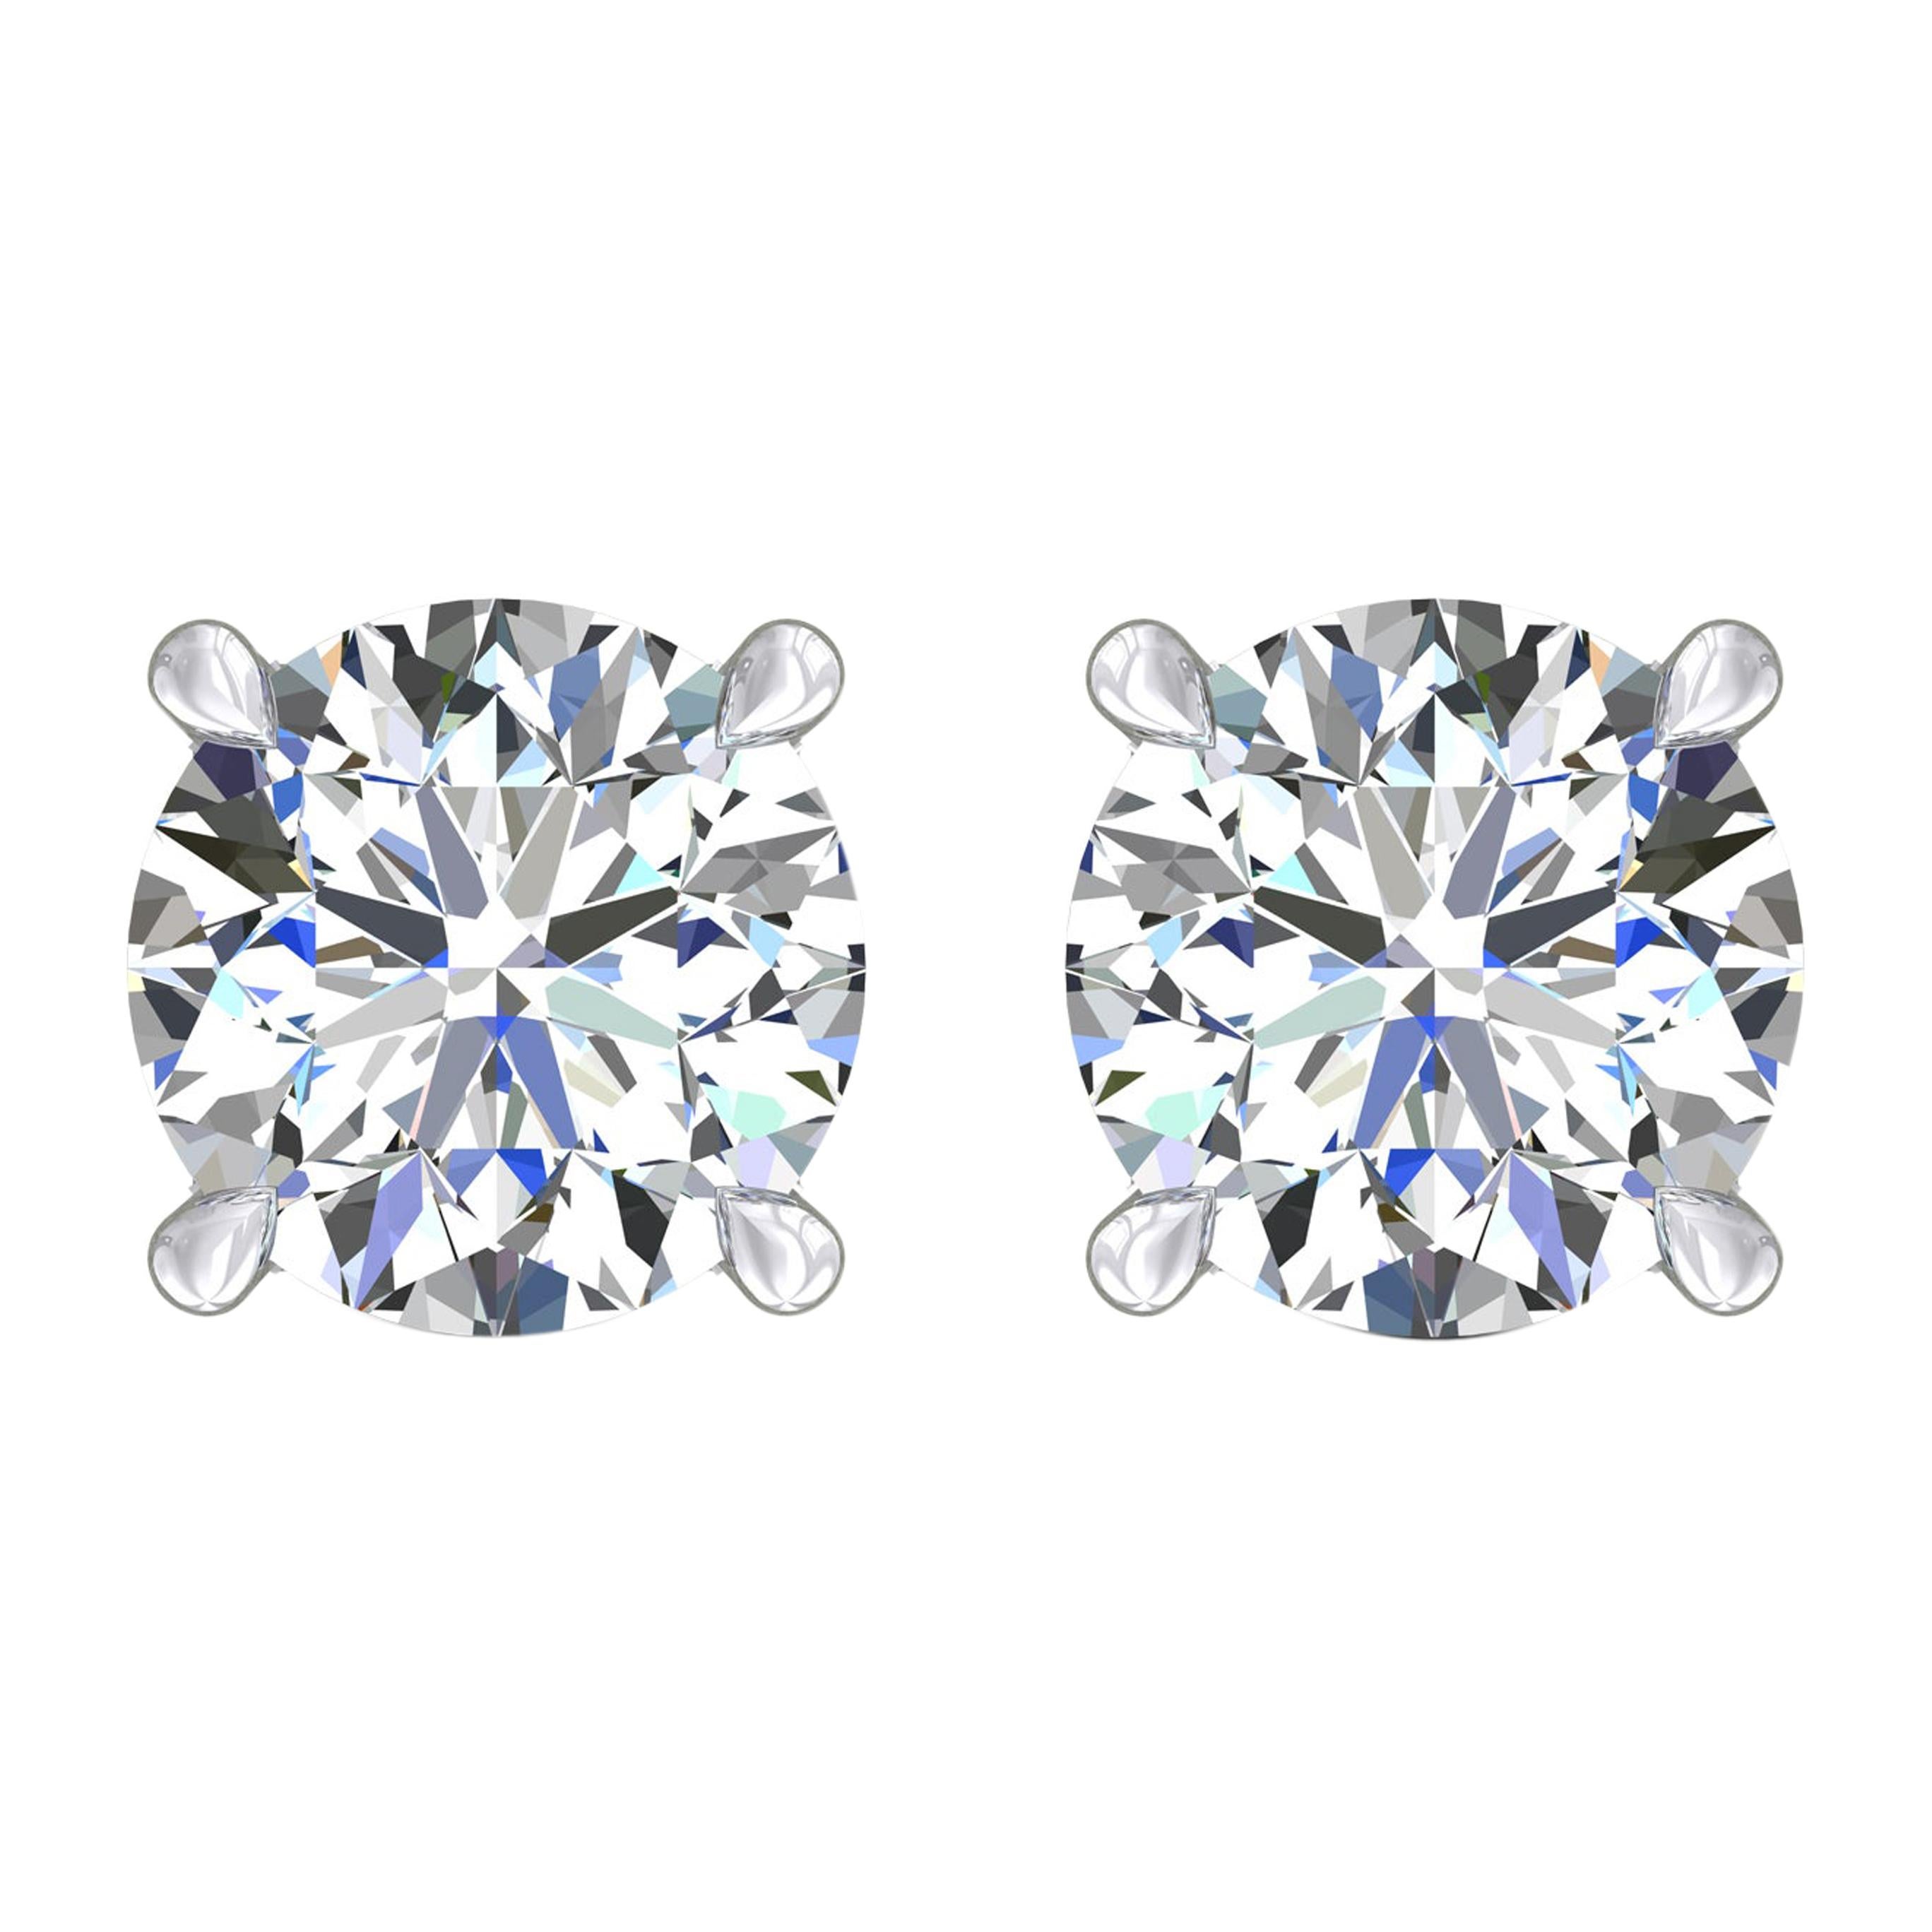 Harakh GIA Certified 0.68 Carat F Color VS2 Clarity 18 KT Diamond Stud Earrings